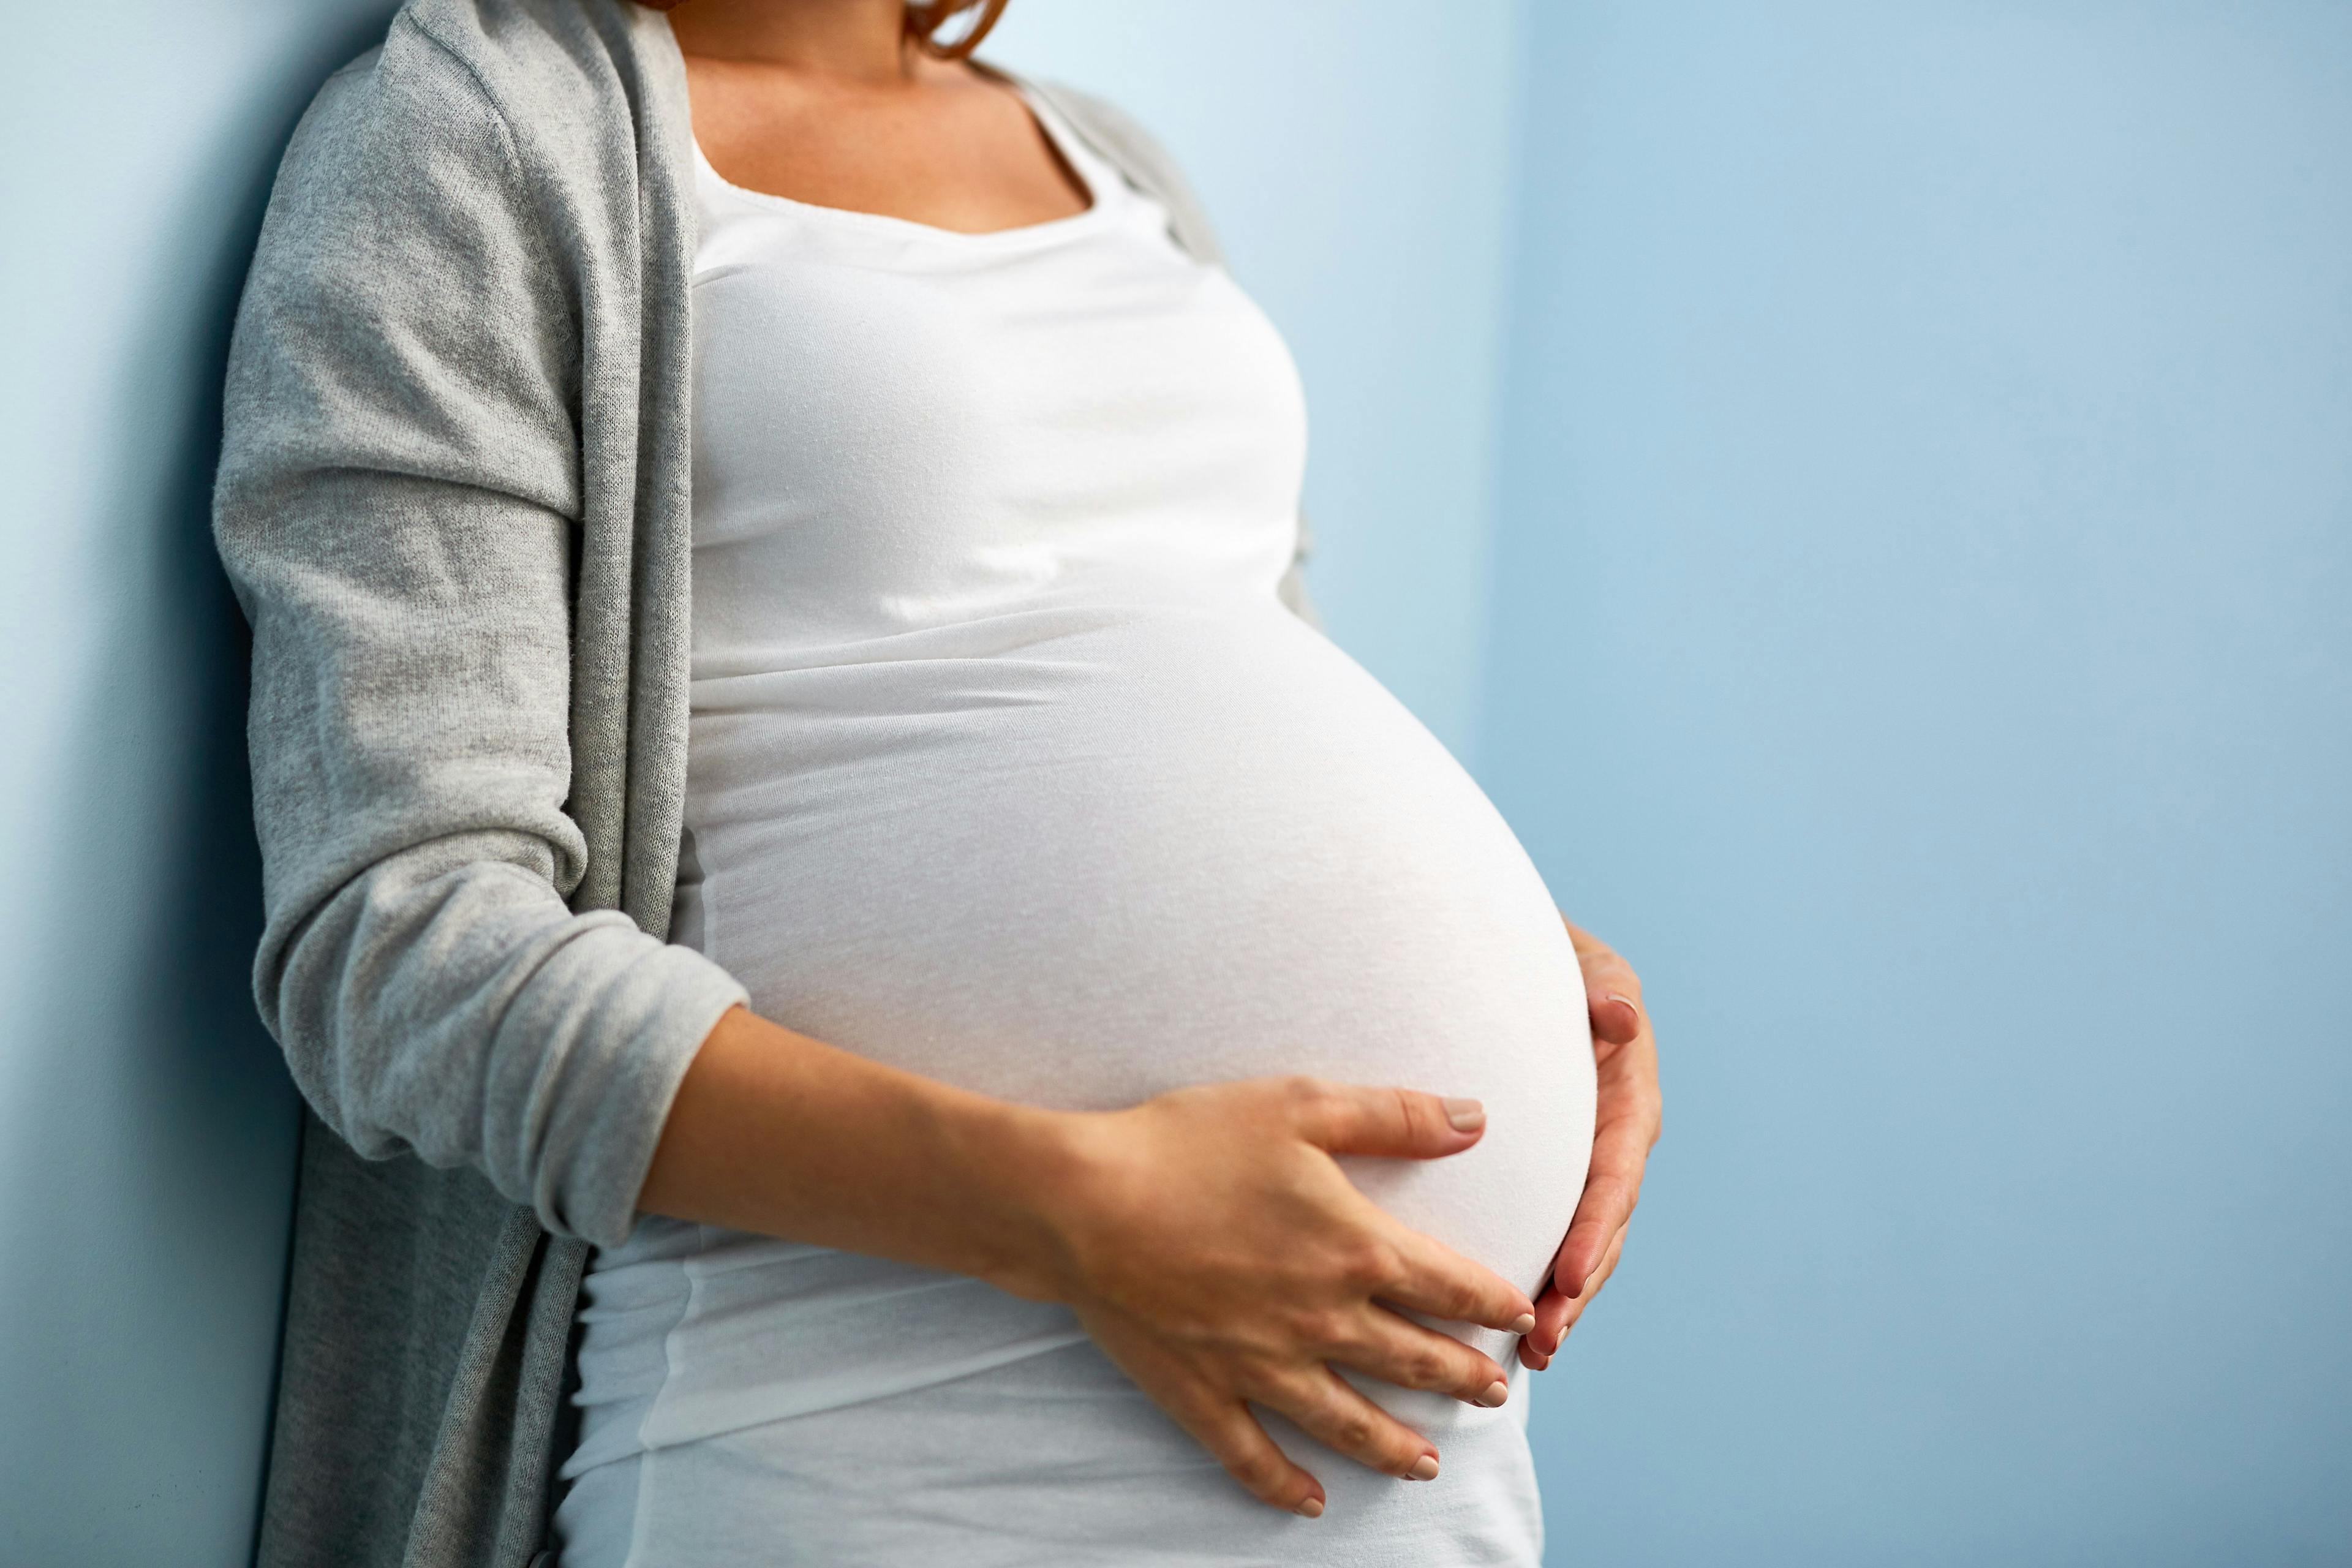 Pregnant woman | Image credit: pressmaster - stock.adobe.com